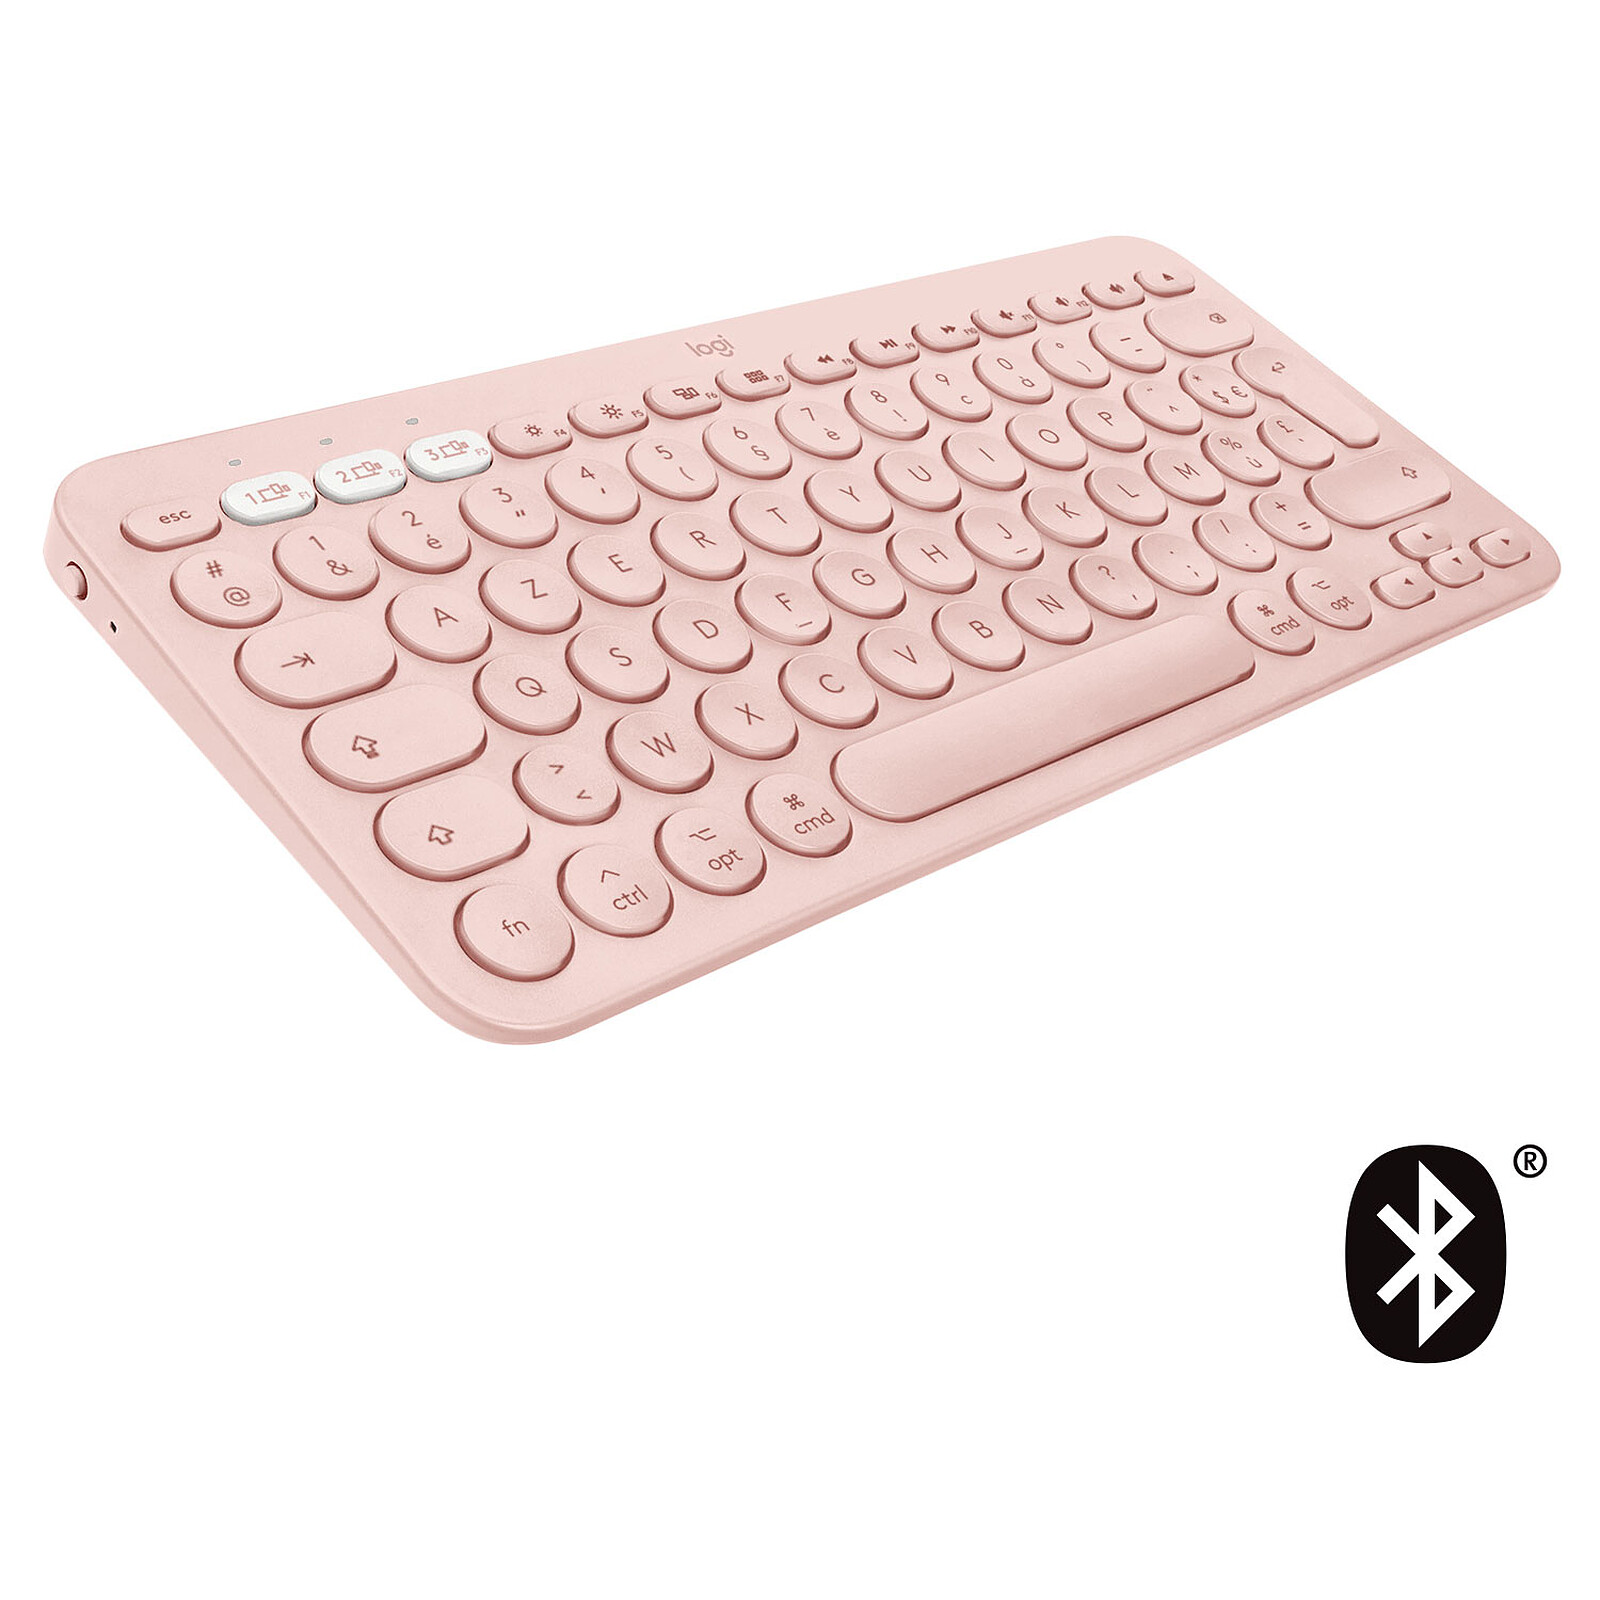 Logitech K380 Multi-Device Bluetooth for Mac (Pink) - Tablet keyboard Logitech on LDLC